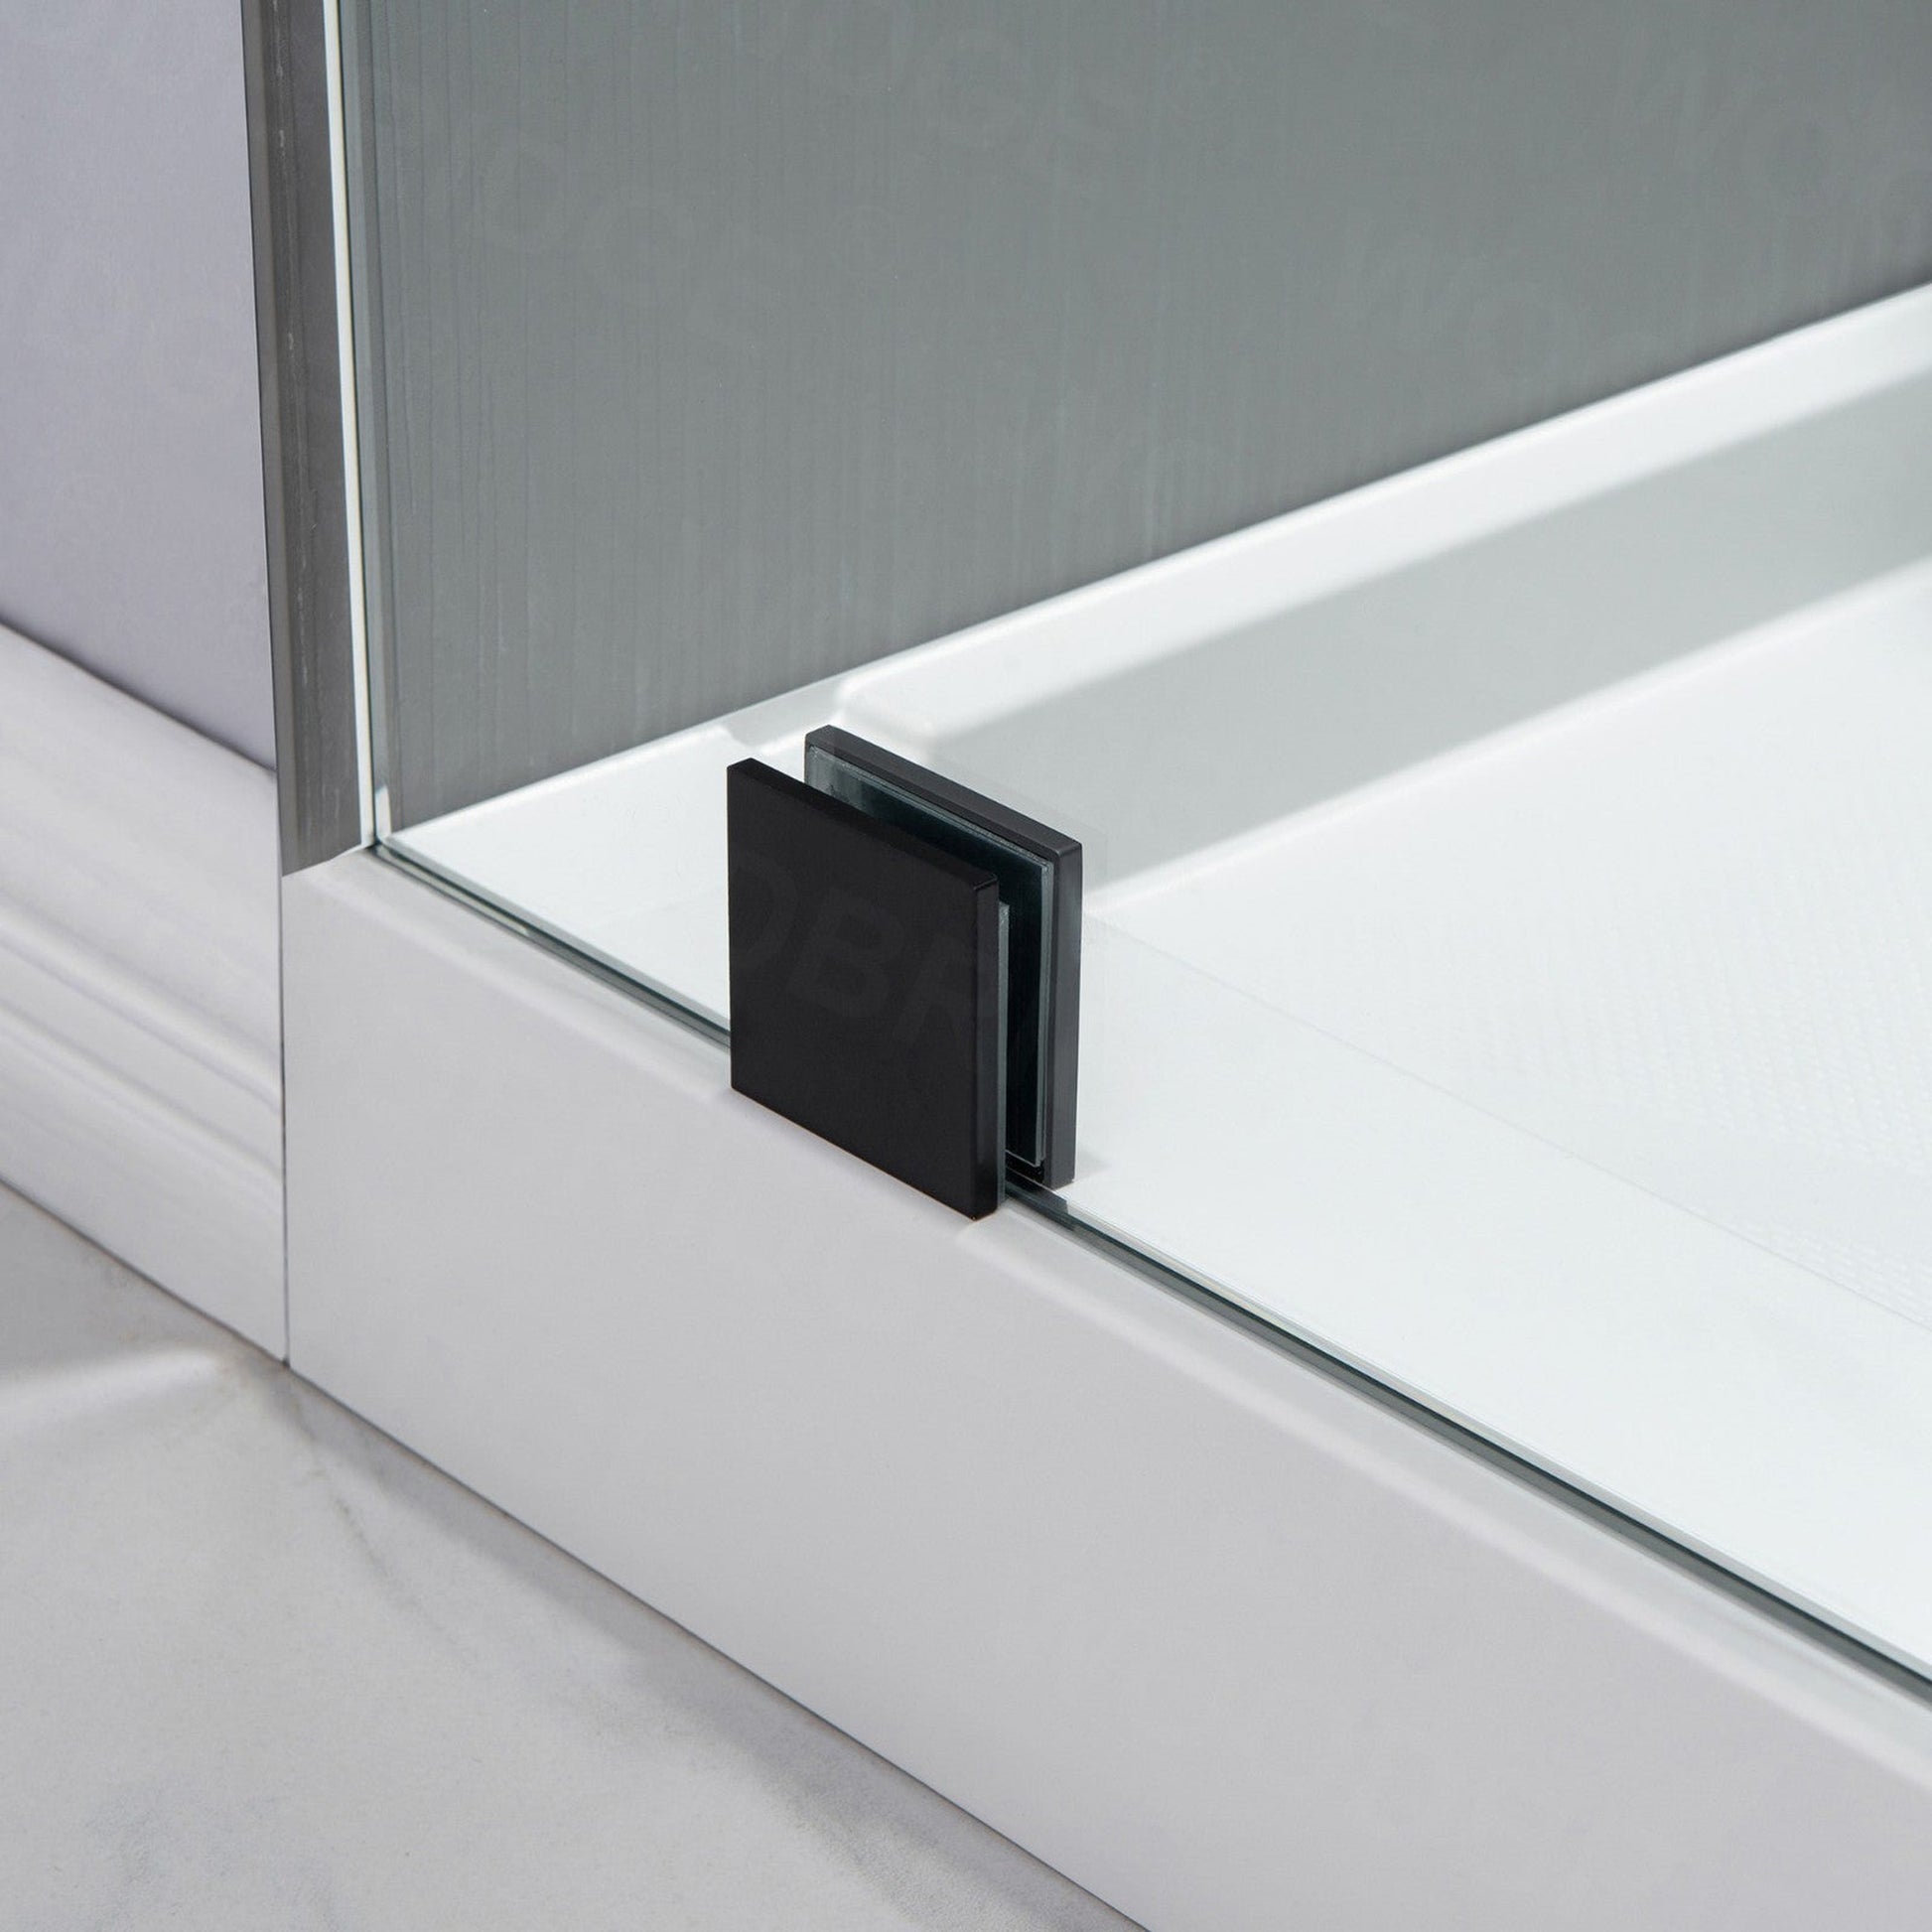 WoodBridge 72" W x 76" H Clear Tempered Glass Frameless Shower Door With Matte Black Hardware Finish